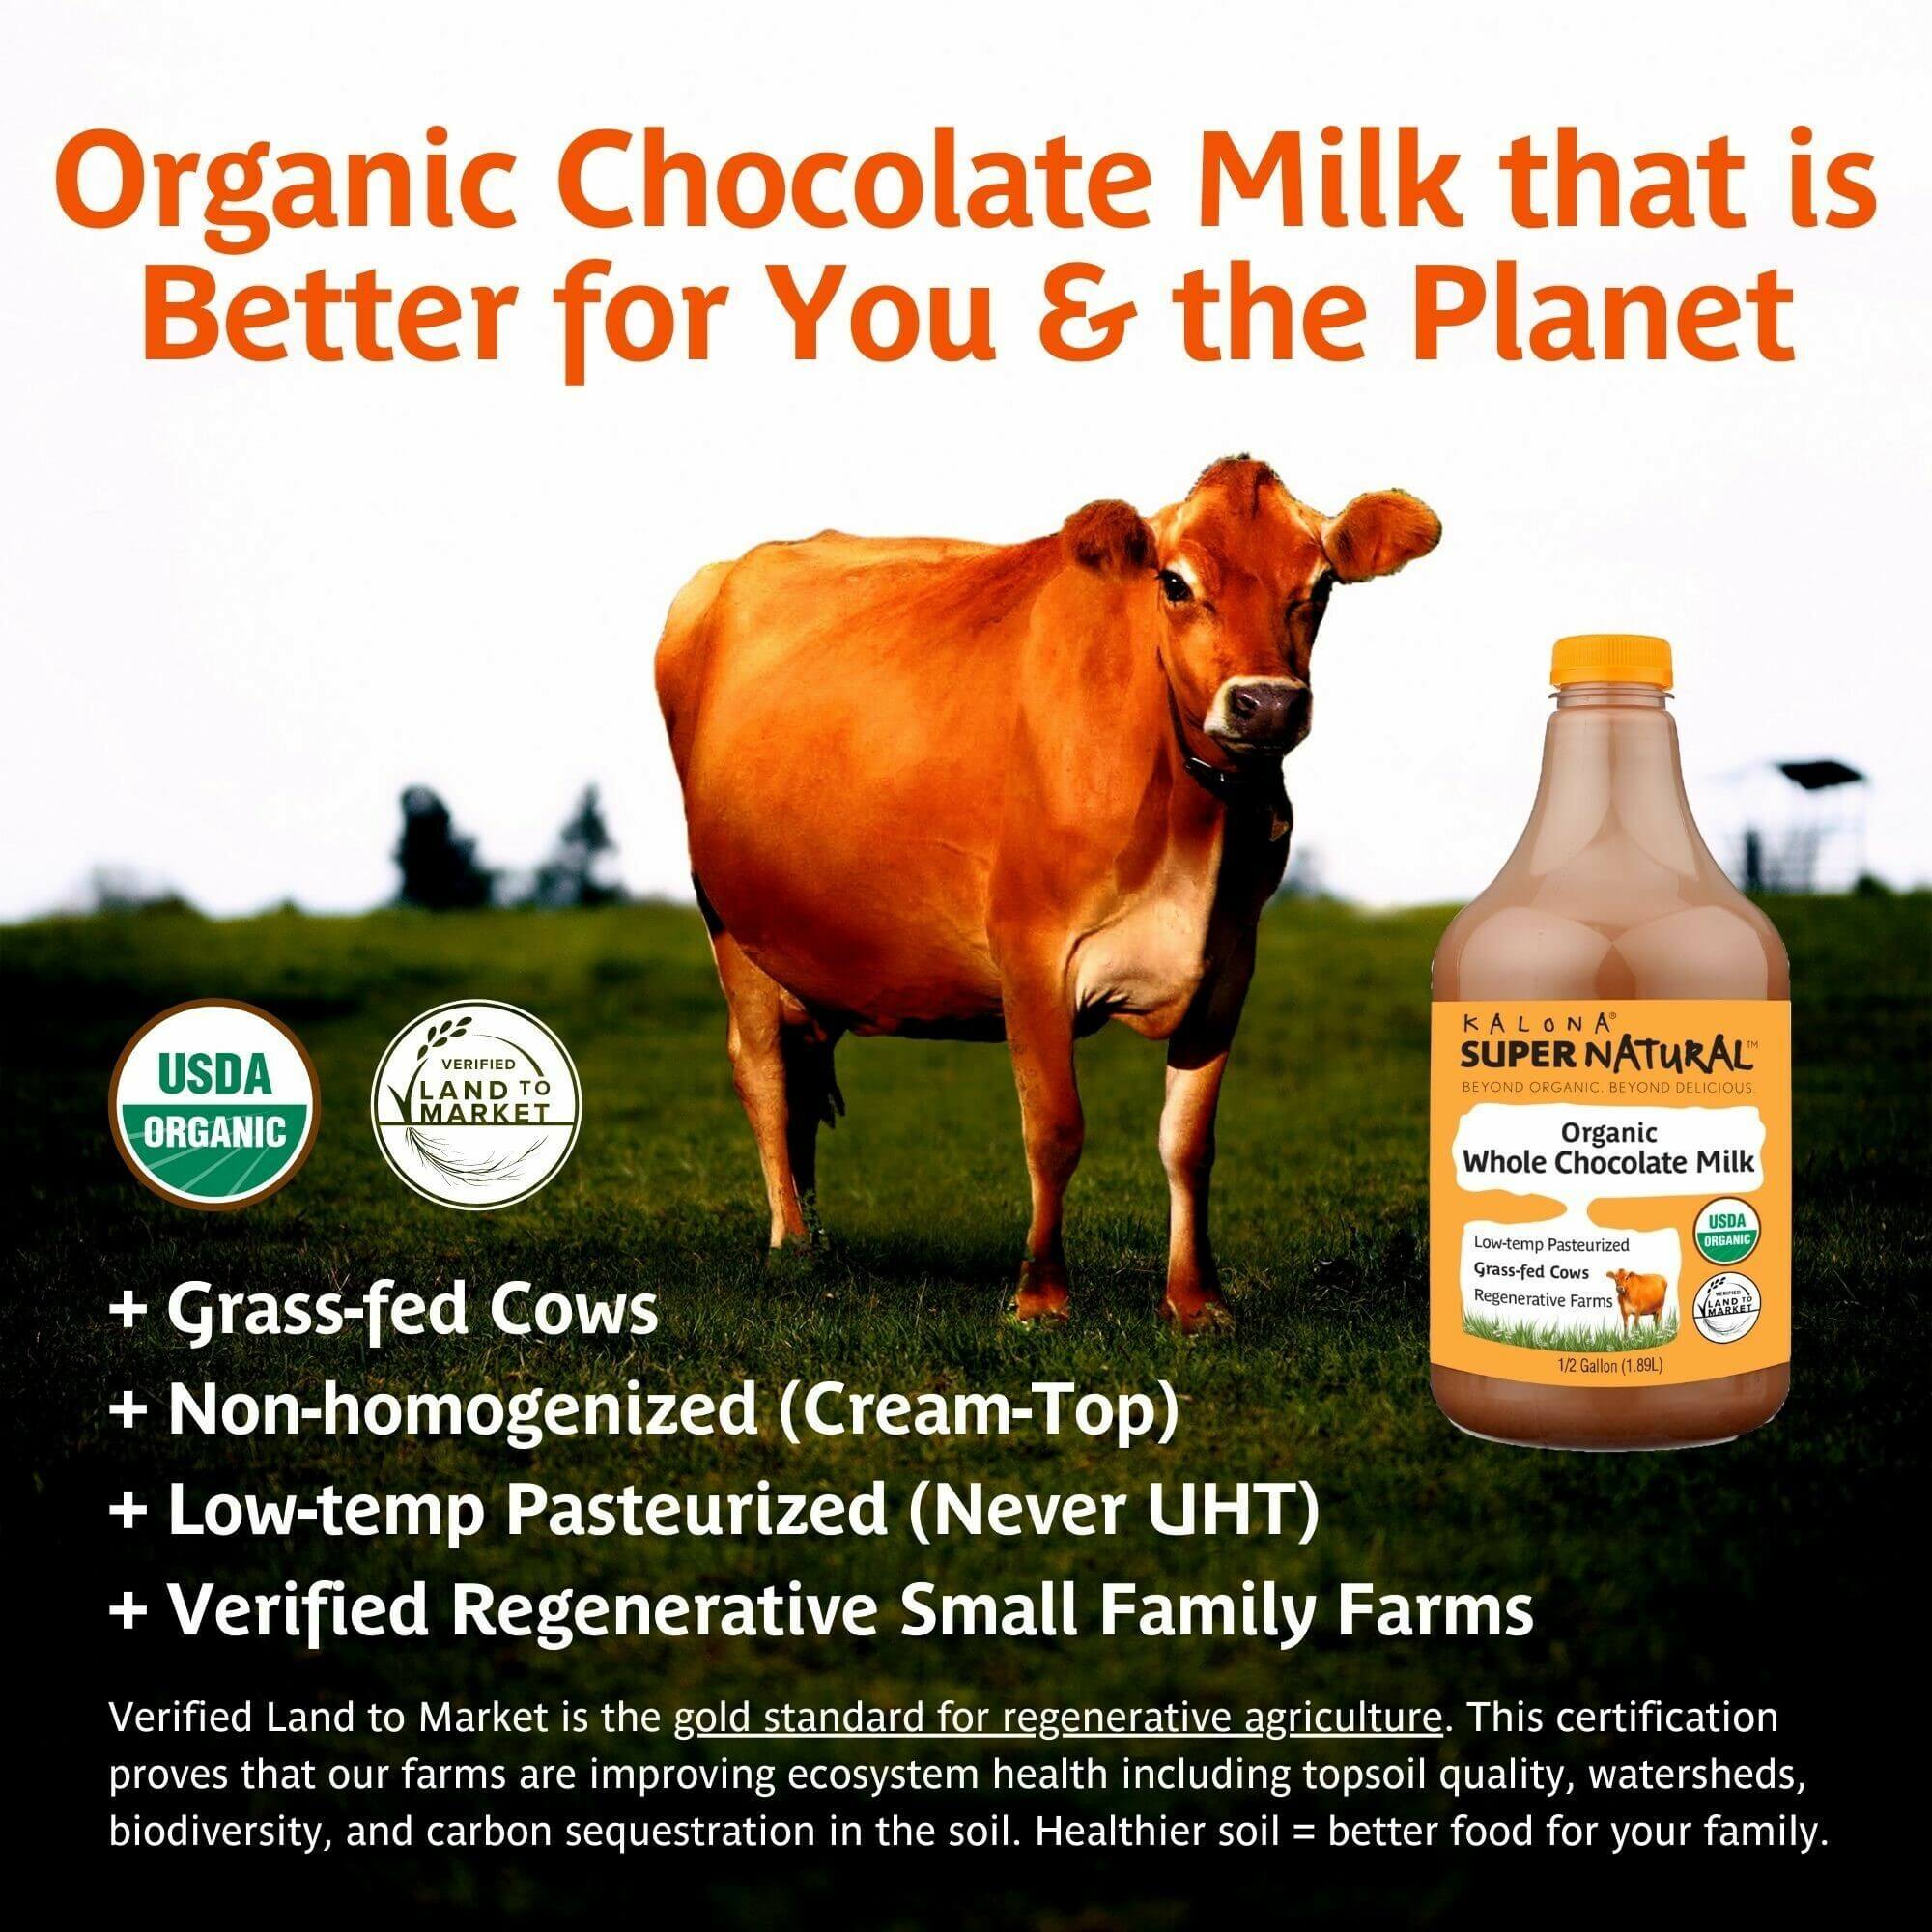 Chocolate Milk Plastic Pint - Purity™ Dairy